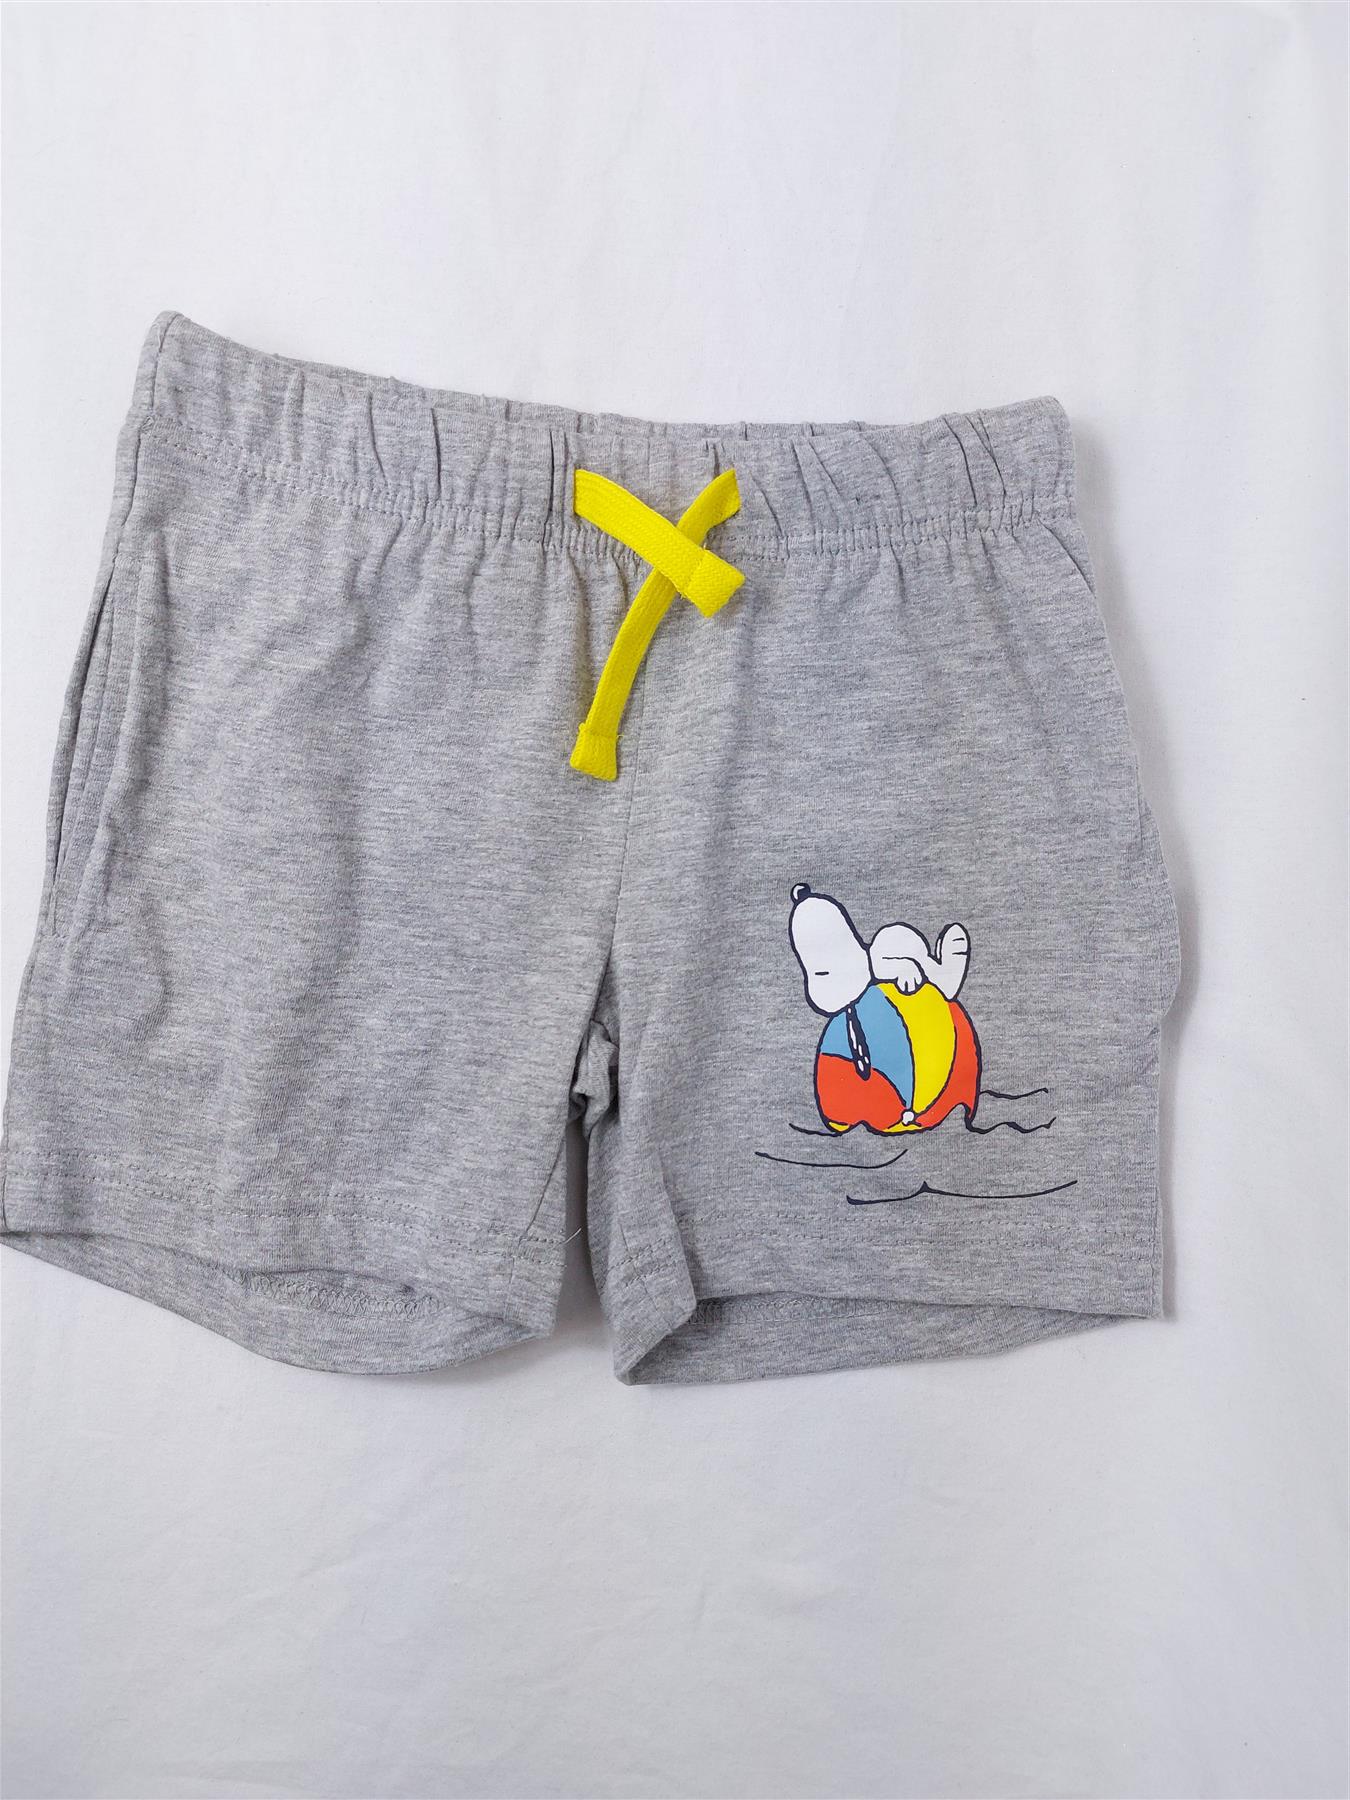 Boys' Pyjama Set Snoopy/Superman Top & Shorts Pure 100% Cotton Soft Comfy PJs